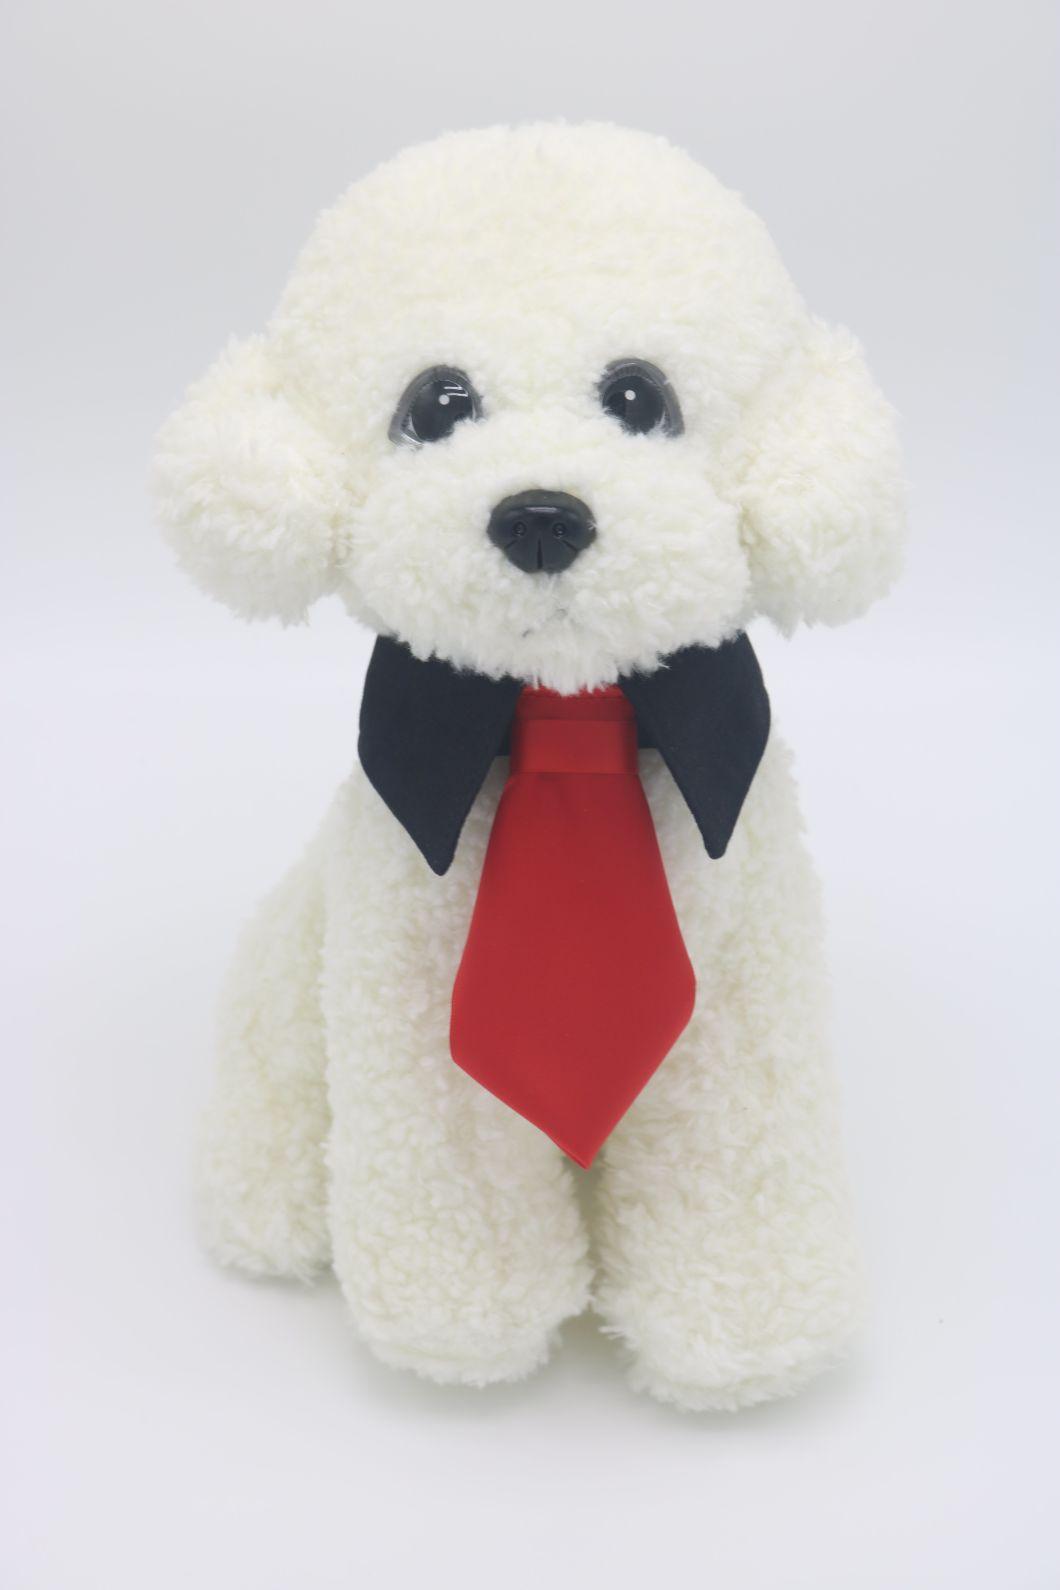 Dog&Cat Formal Neck Tie Tuxedo Bow Tie and Collar Black